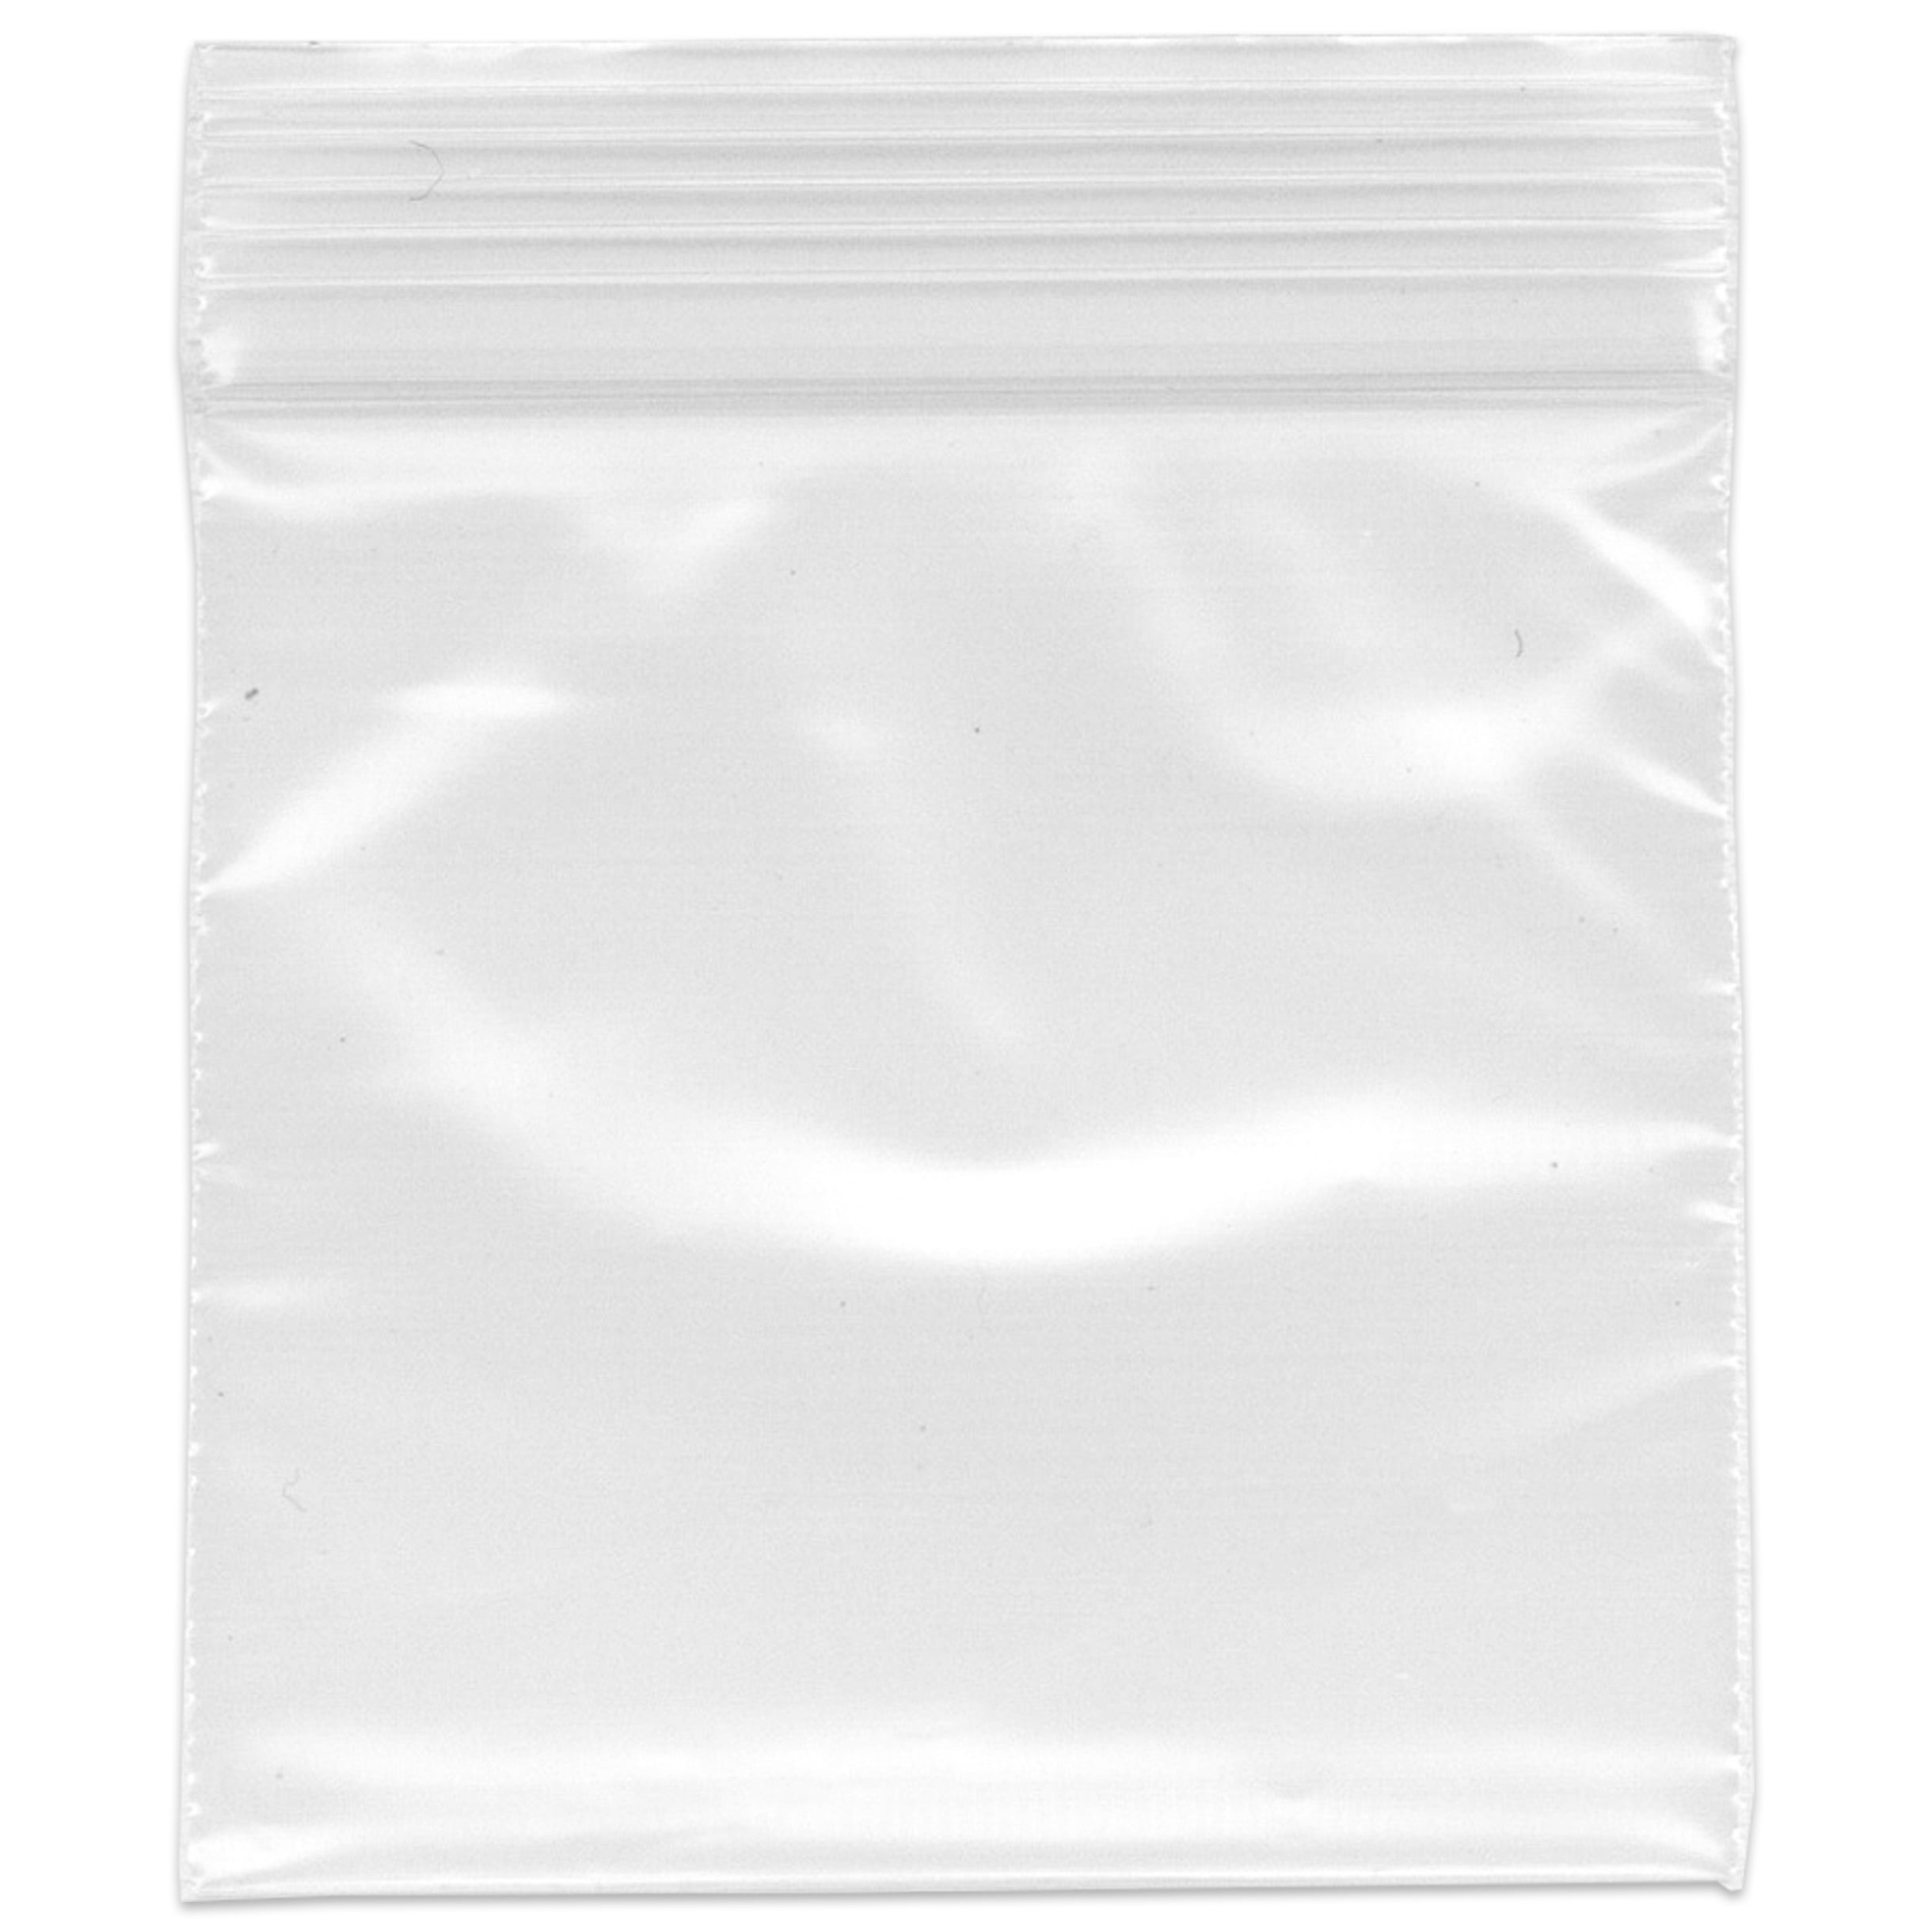 Plymor Zipper Reclosable Plastic Bags, 2 Mil, 2.5 x 2.5 (Pack of 500)